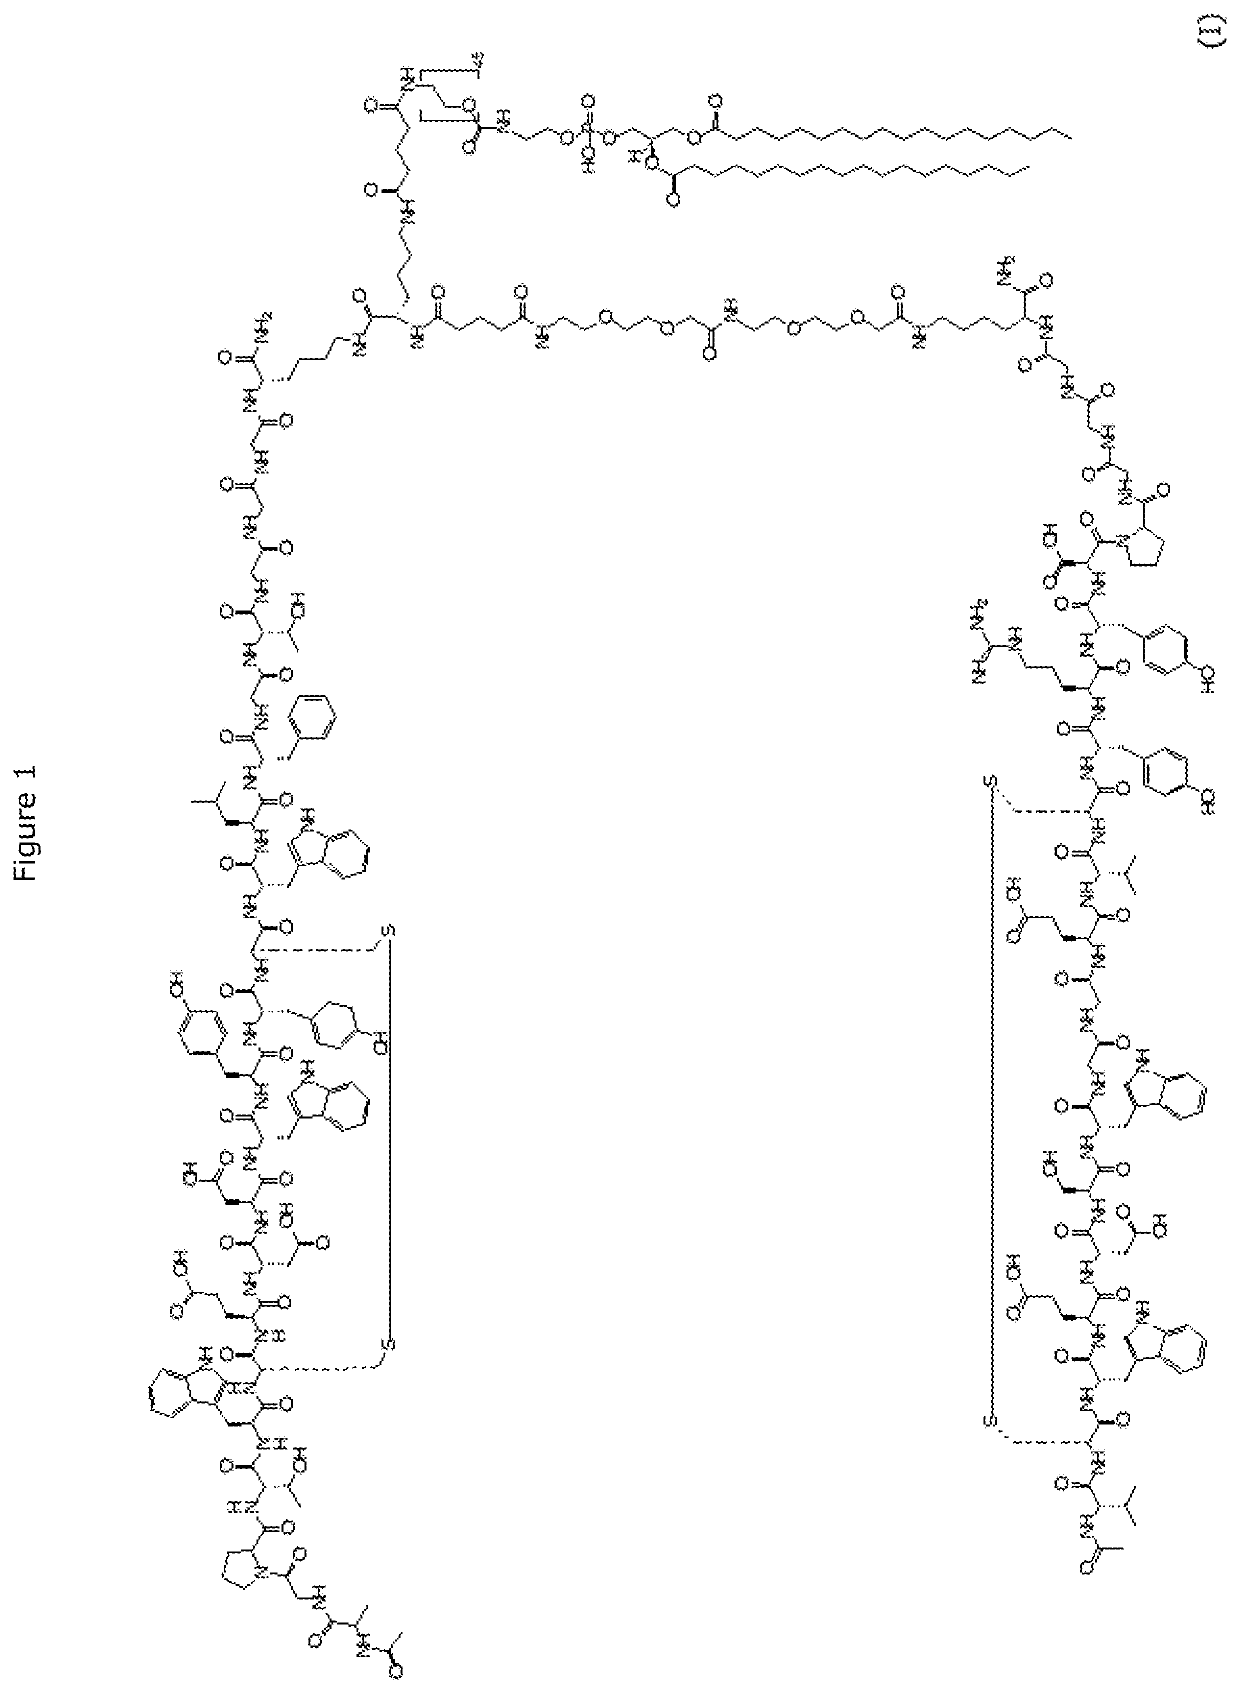 Optimized process for dimeric peptide-phospholipid conjugate